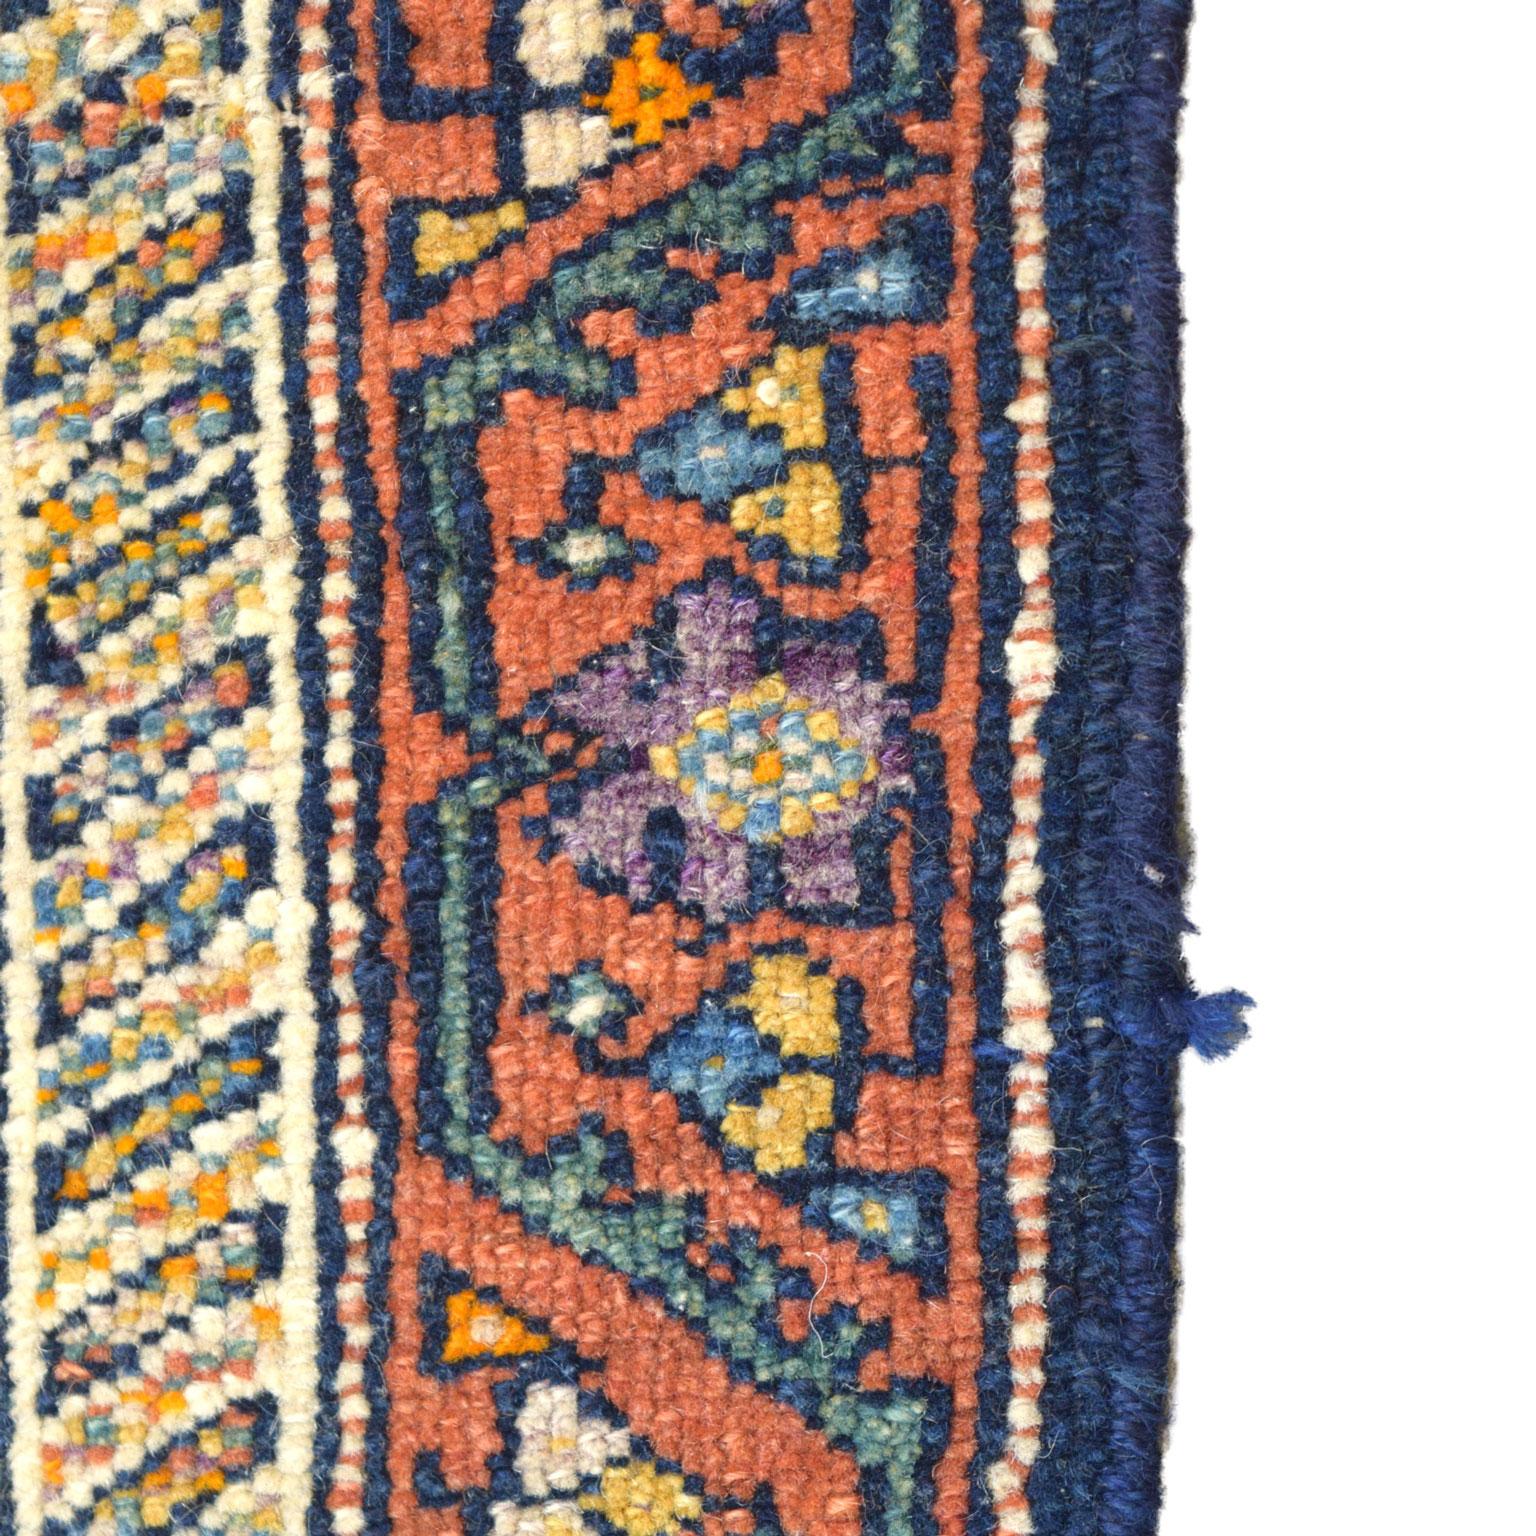 Tribal Antique 1880s Wool Persian Kashkouli Rug Featuring Karim Khan Zand, 2' x 2' For Sale